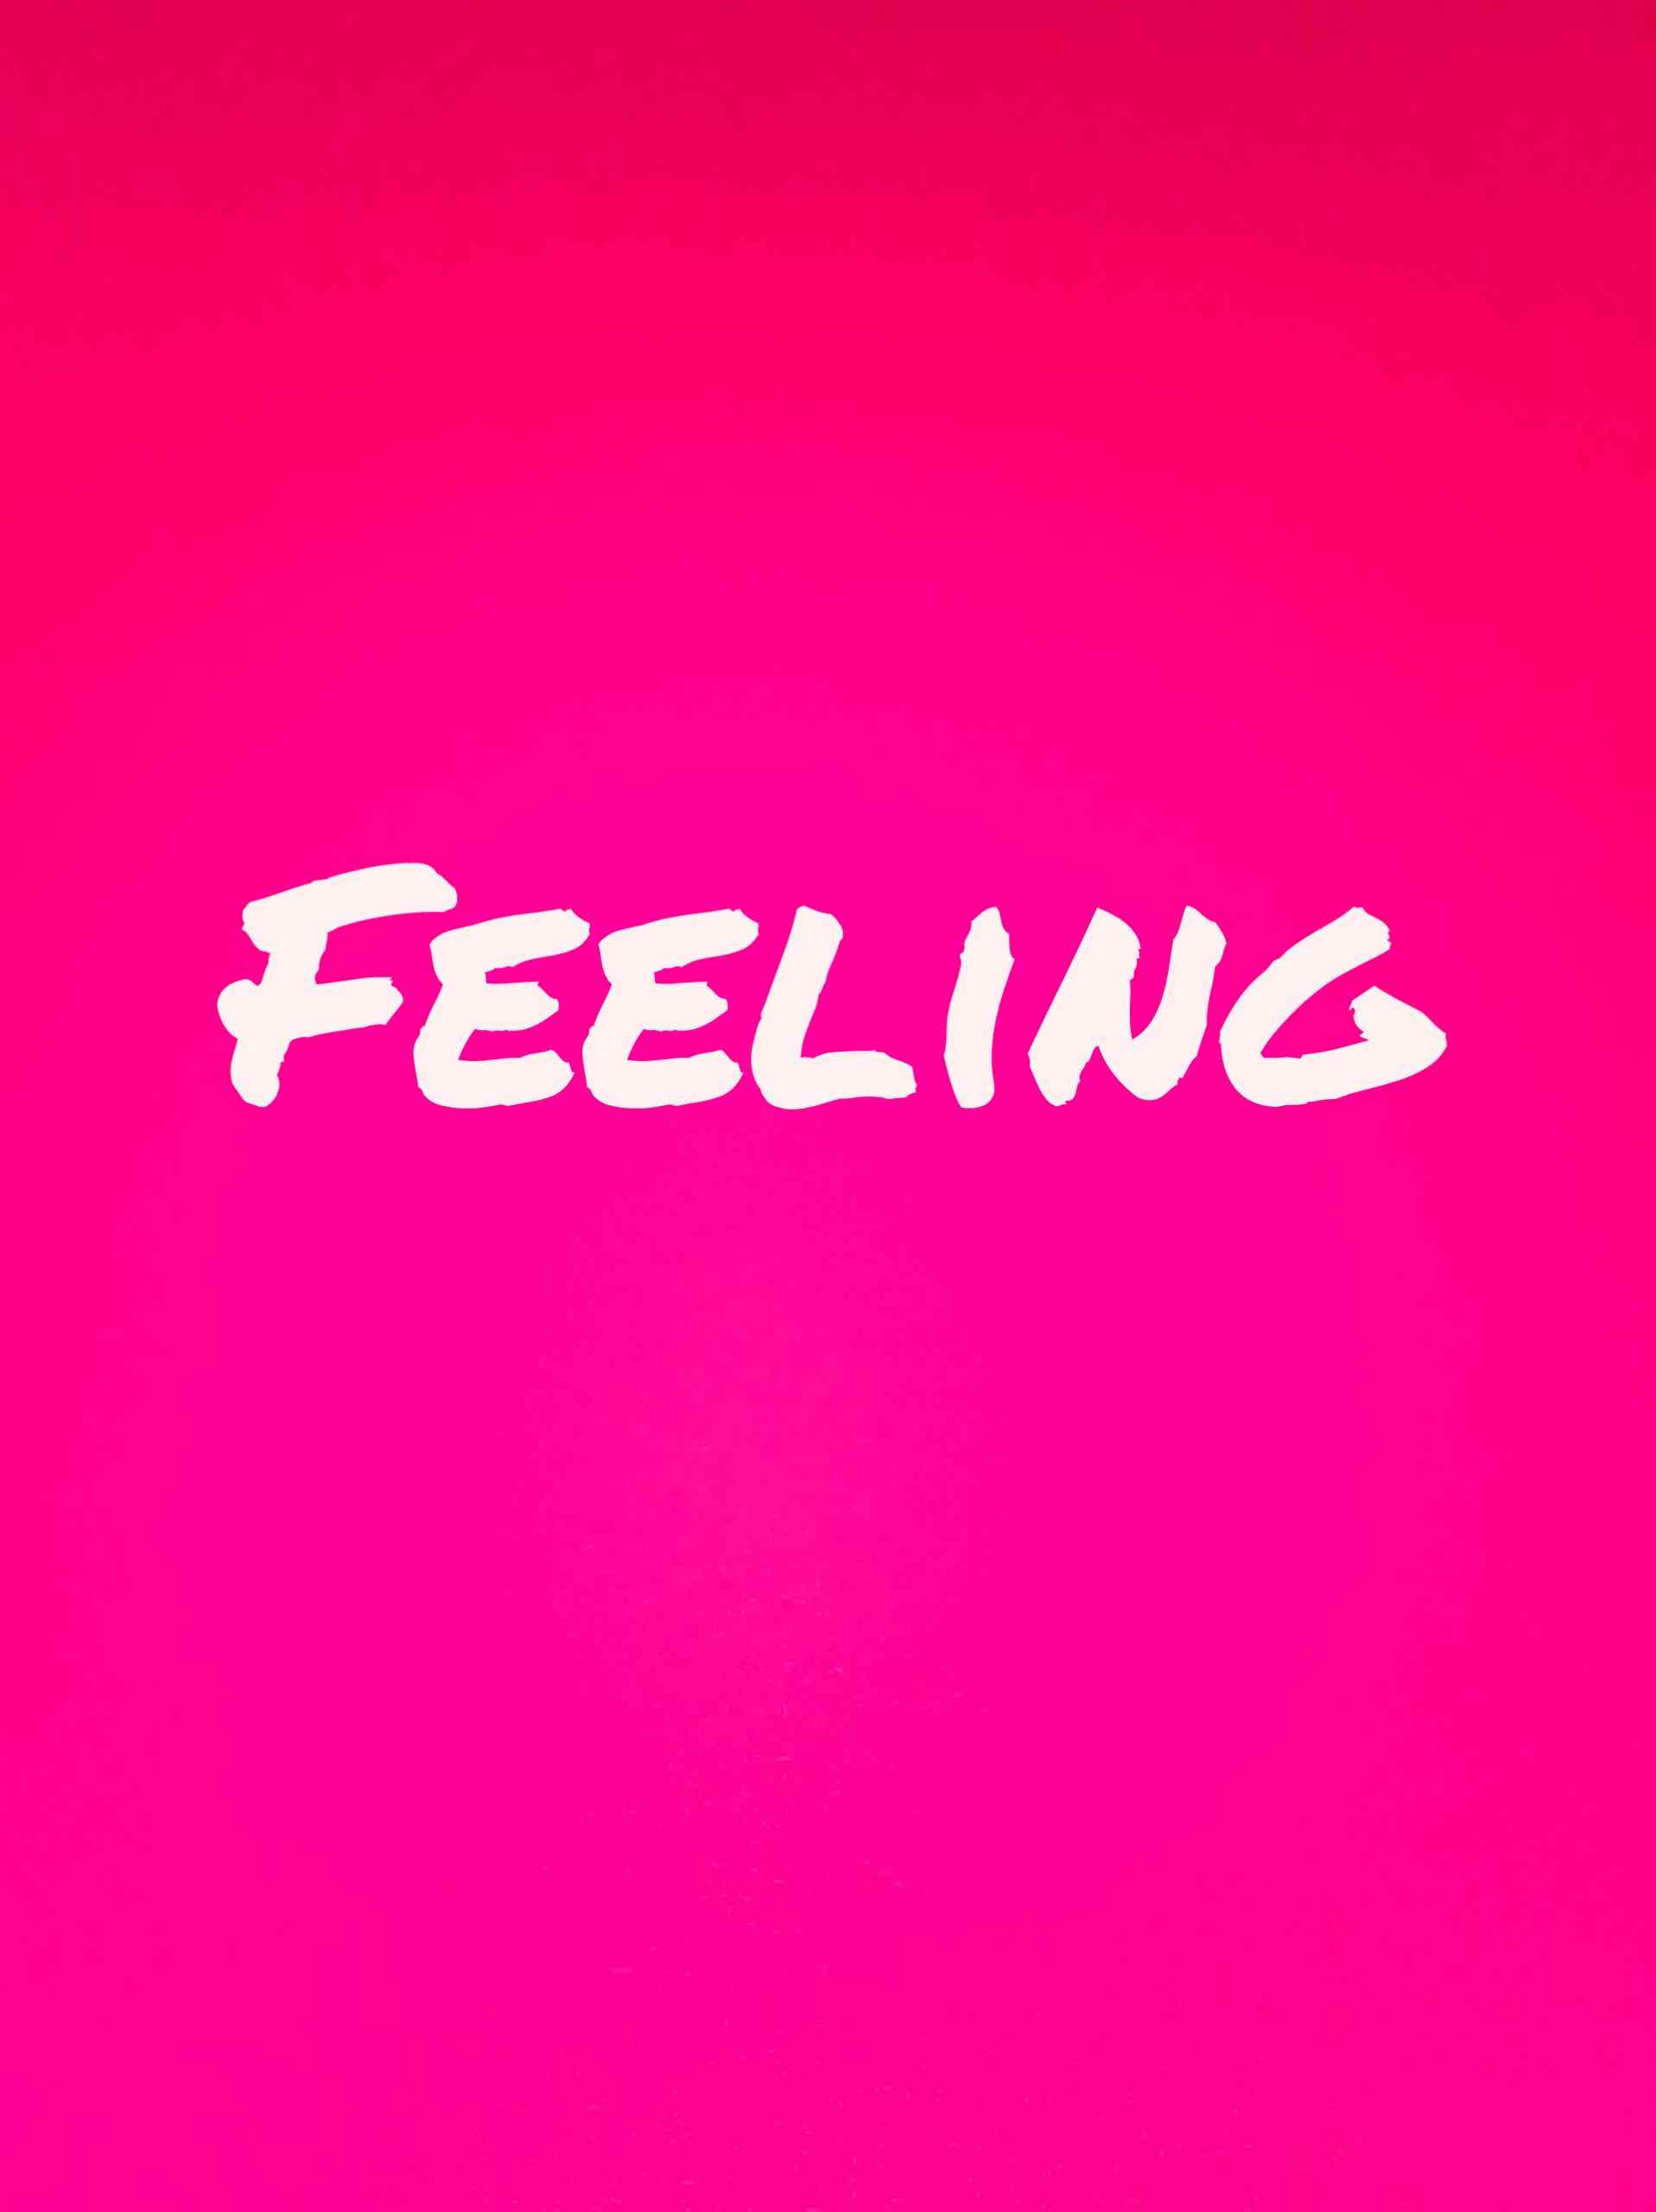 Heculidz Dj - Feeling (Joy)